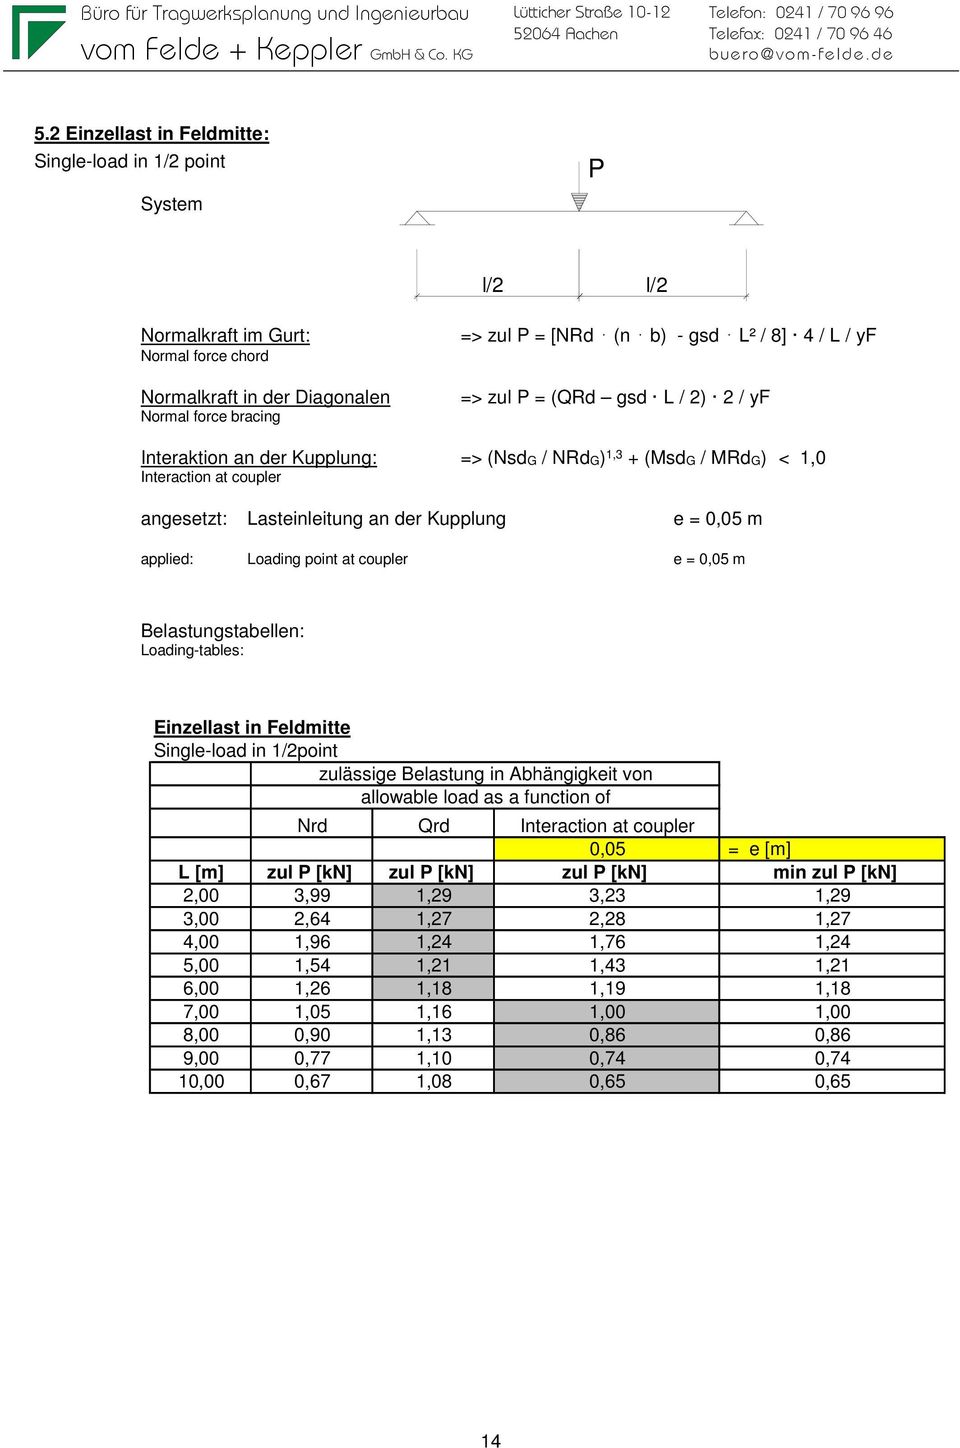 Loading point at coupler e = 0,05 m Belastungstabellen: Loading-tables: Einzellast in Feldmitte Single-load in 1/2point zulässige Belastung in Abhängigkeit von allowable load as a function of Nrd Qrd